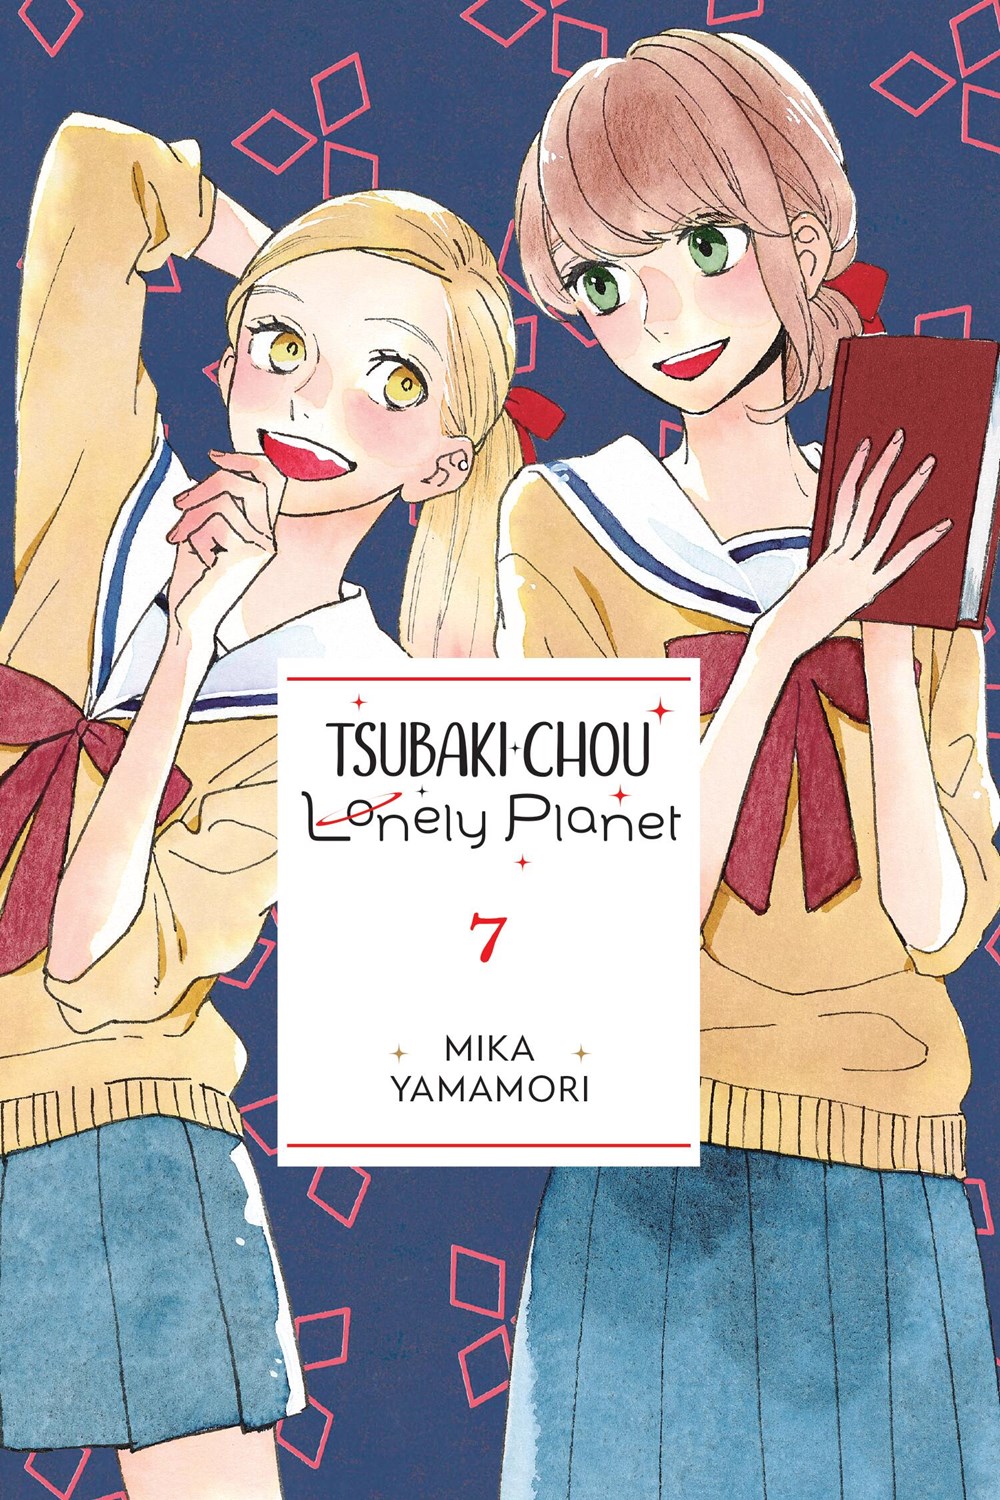 Tsubaki-chou Lonely Planet Manga Volume 7 image count 0